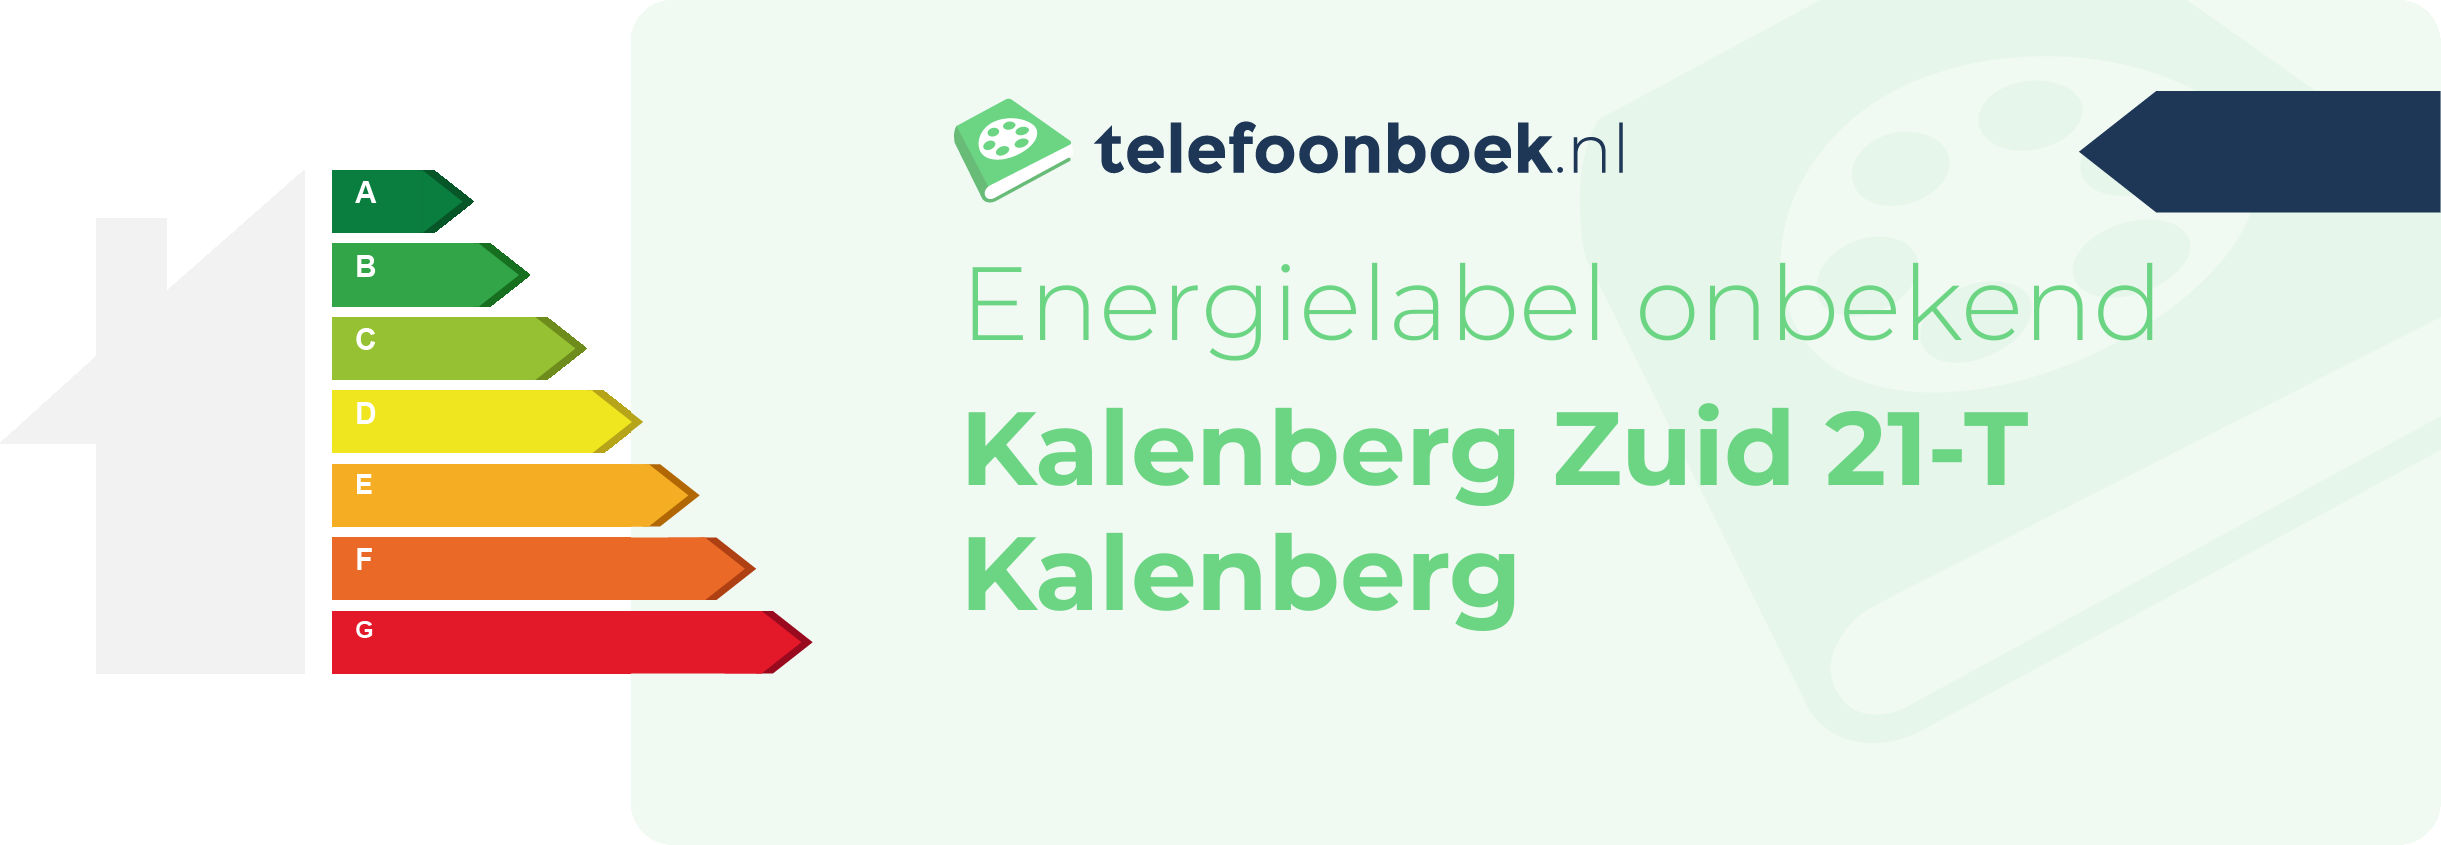 Energielabel Kalenberg Zuid 21-T Kalenberg